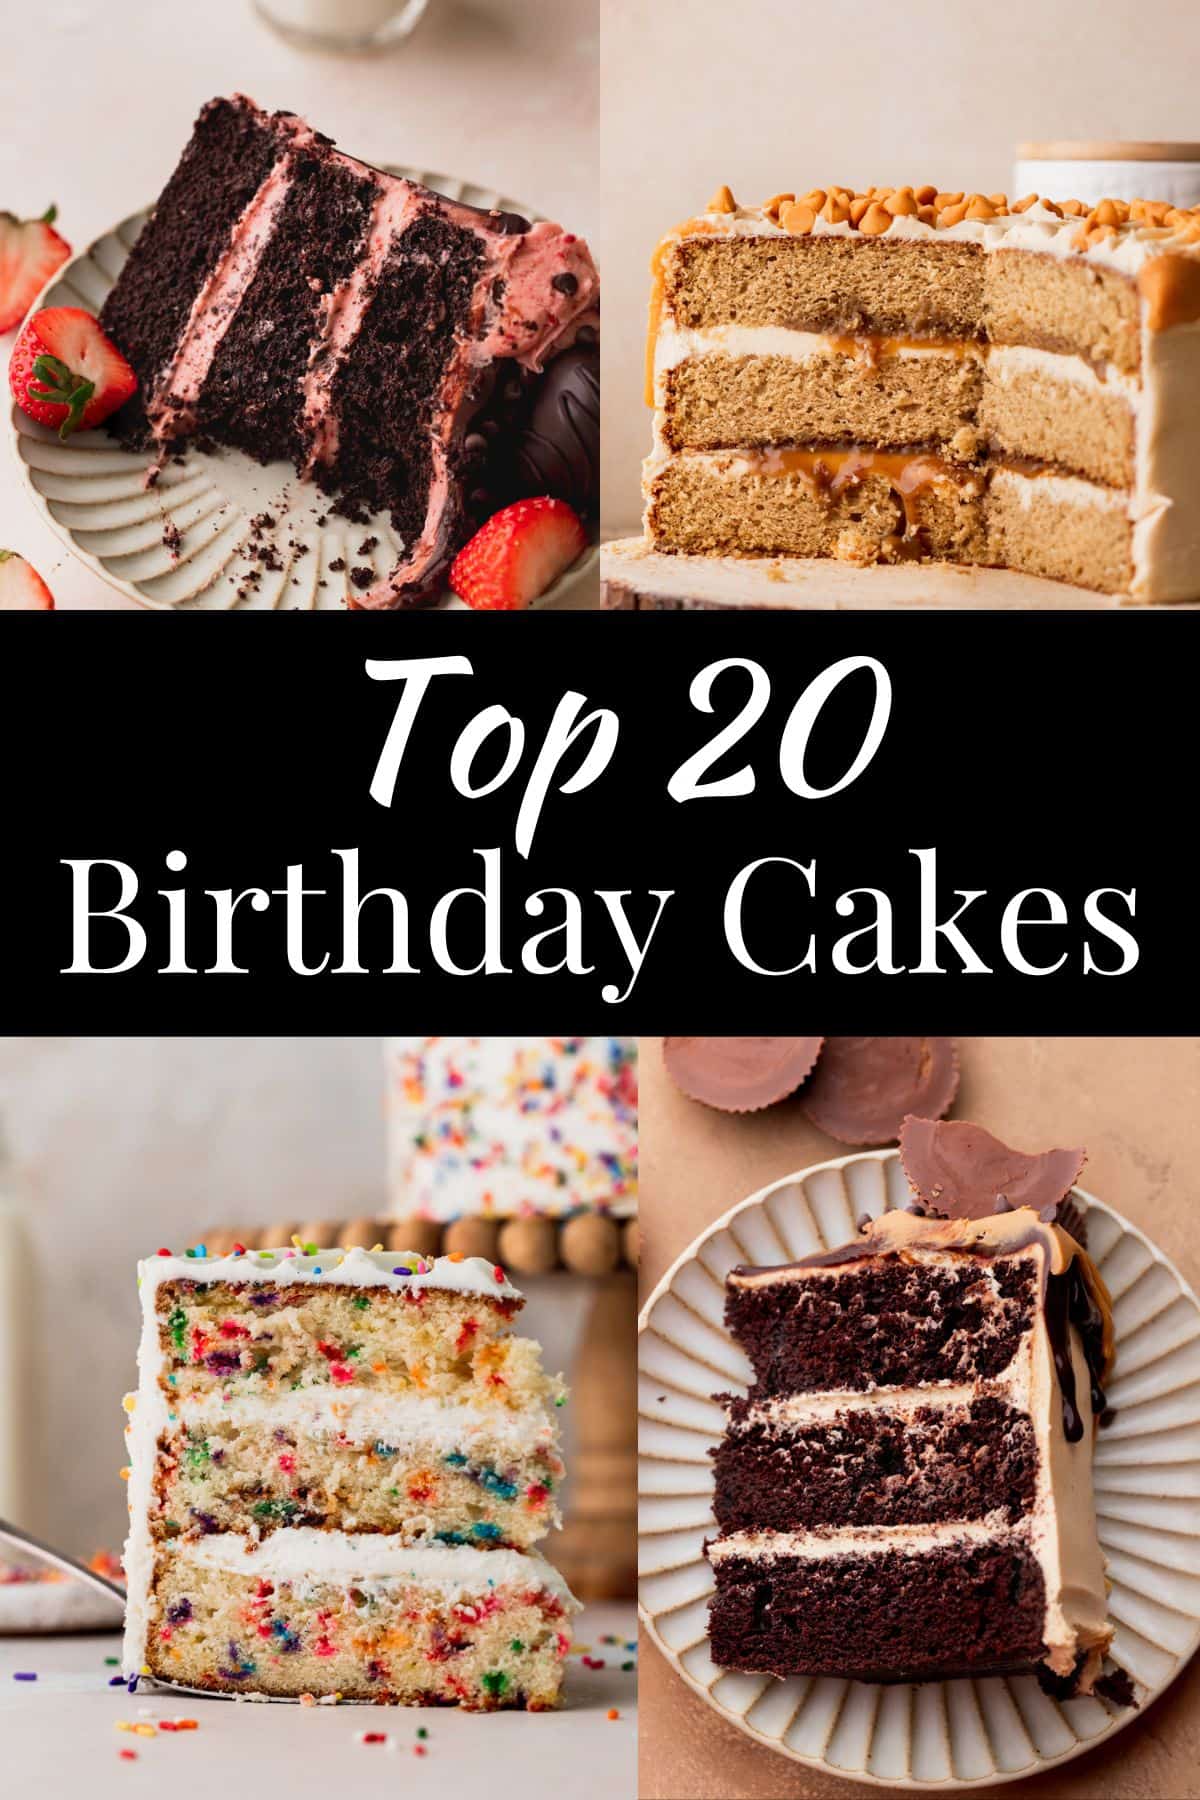 18 Boys Birthday Cake Ideas For All Ages